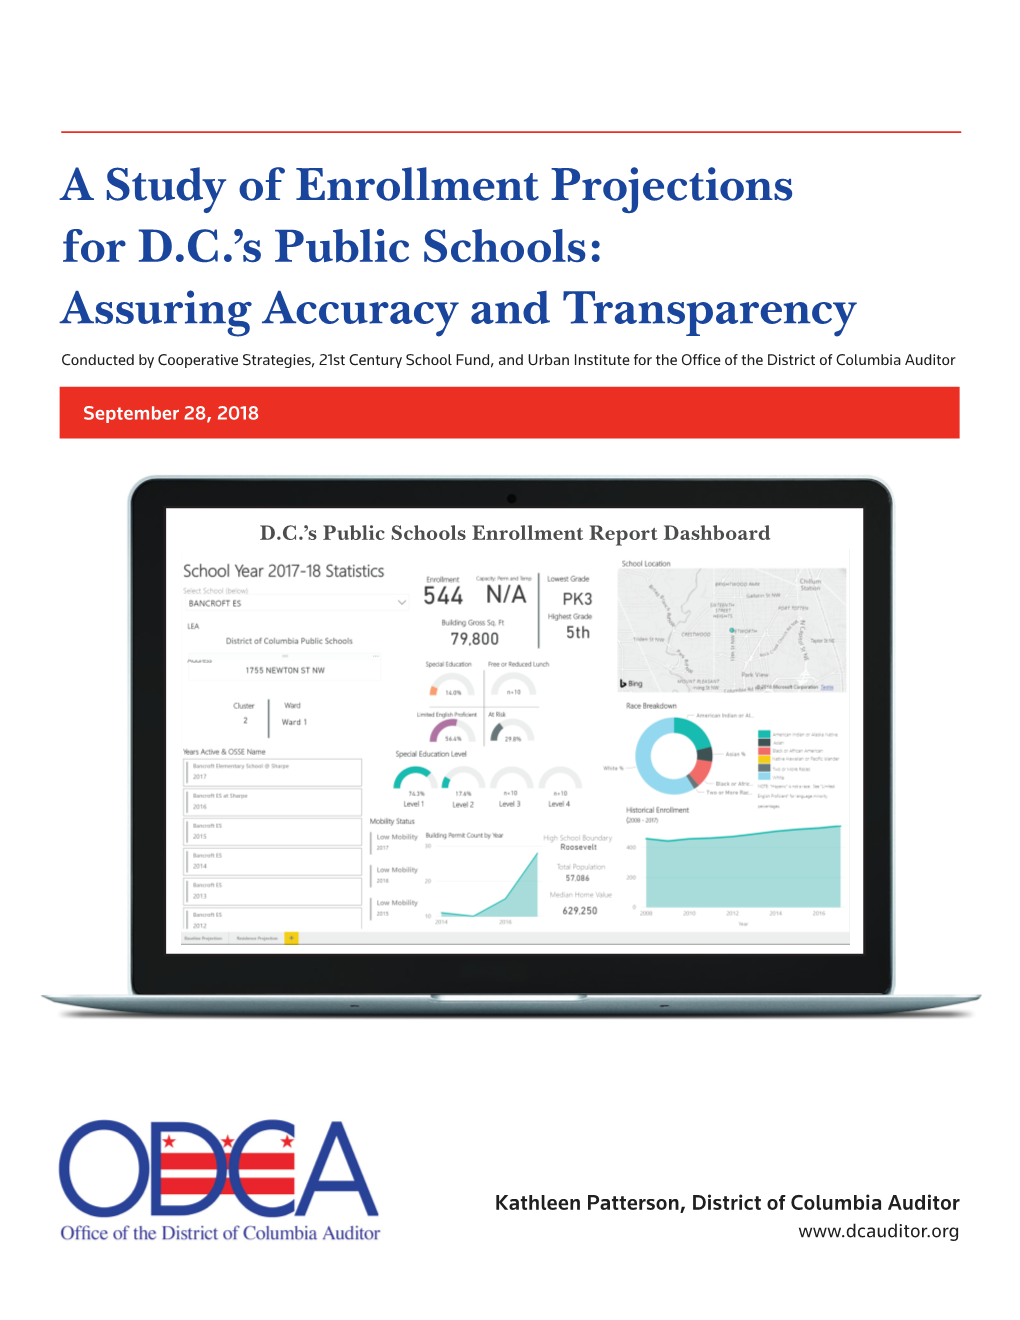 A Study of Enrollment Projections for DC's Public Schools